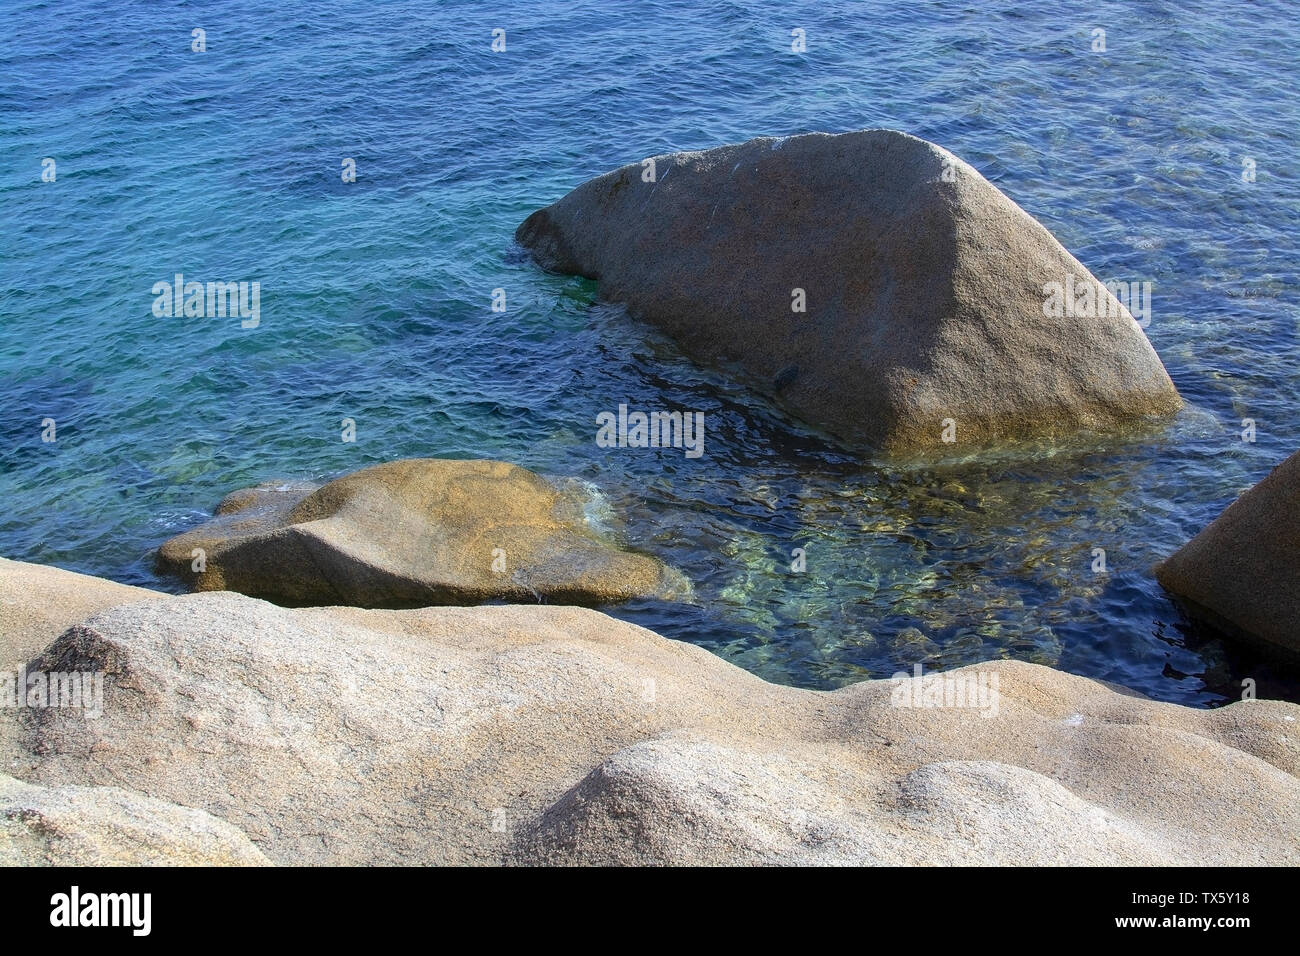 Beautiful smooth eroded granite rocks and green Mediterranean water in Costa Smeralda, Sardinia, Italy. Stock Photo